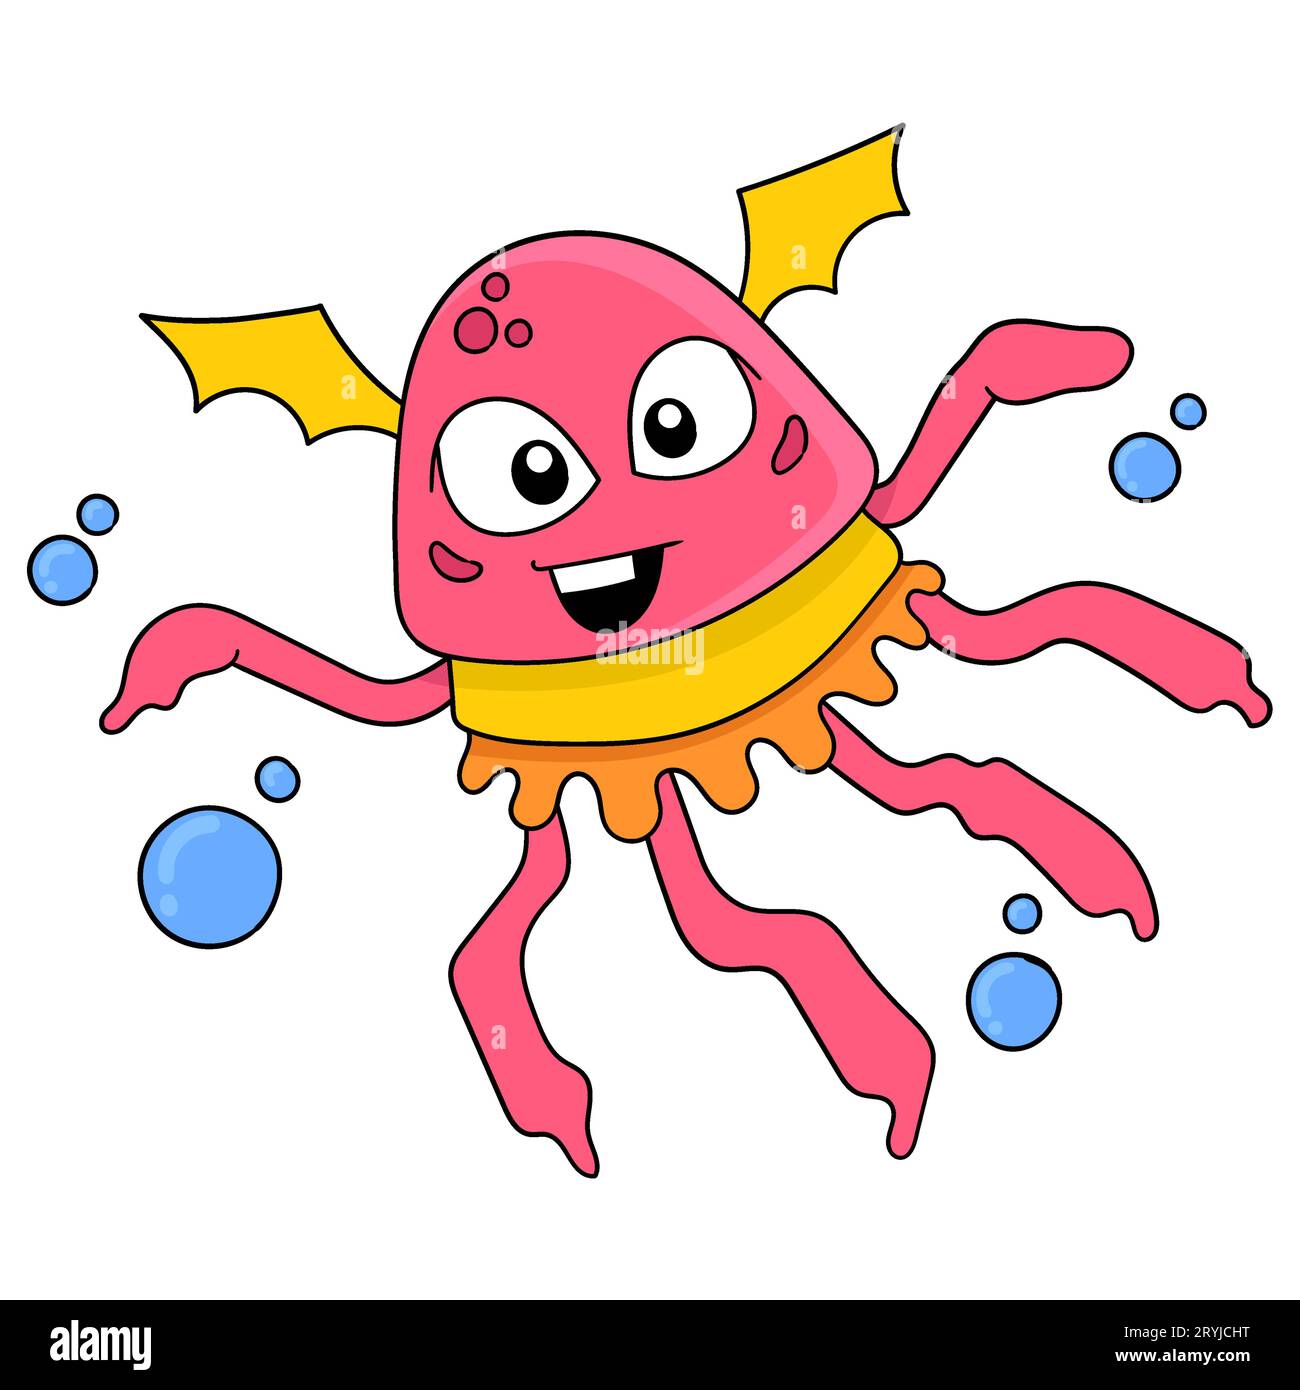 Alien Monster Qualle rot freundlich Gesicht lächelnd, Vektor-Illustration Kunst. Doodle Symbol Bild kawaii. Stockfoto